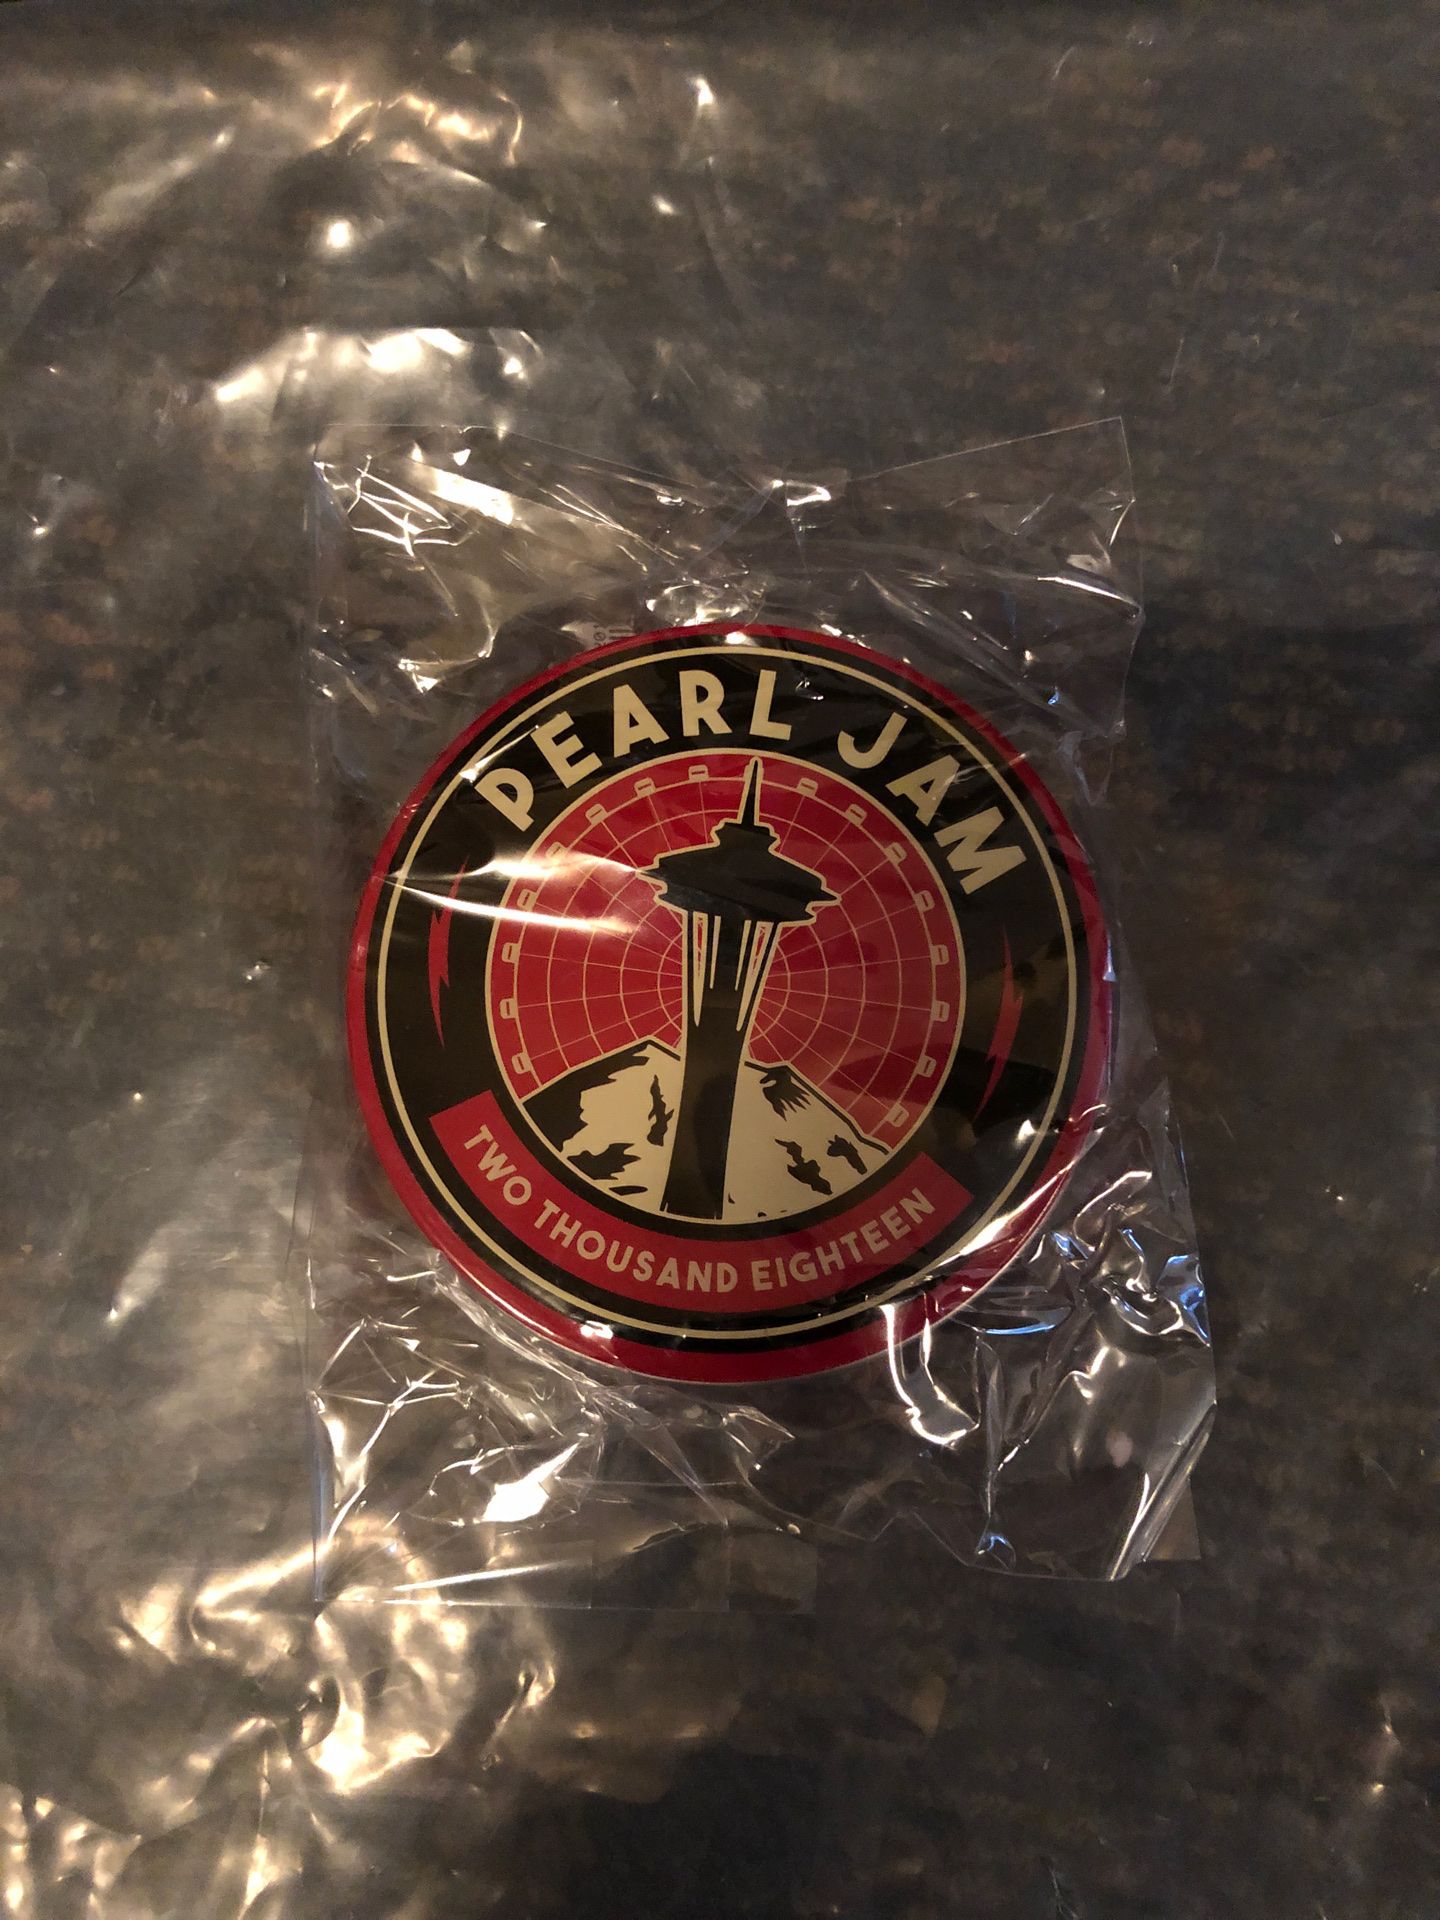 Pearl Jam home shows coaster set